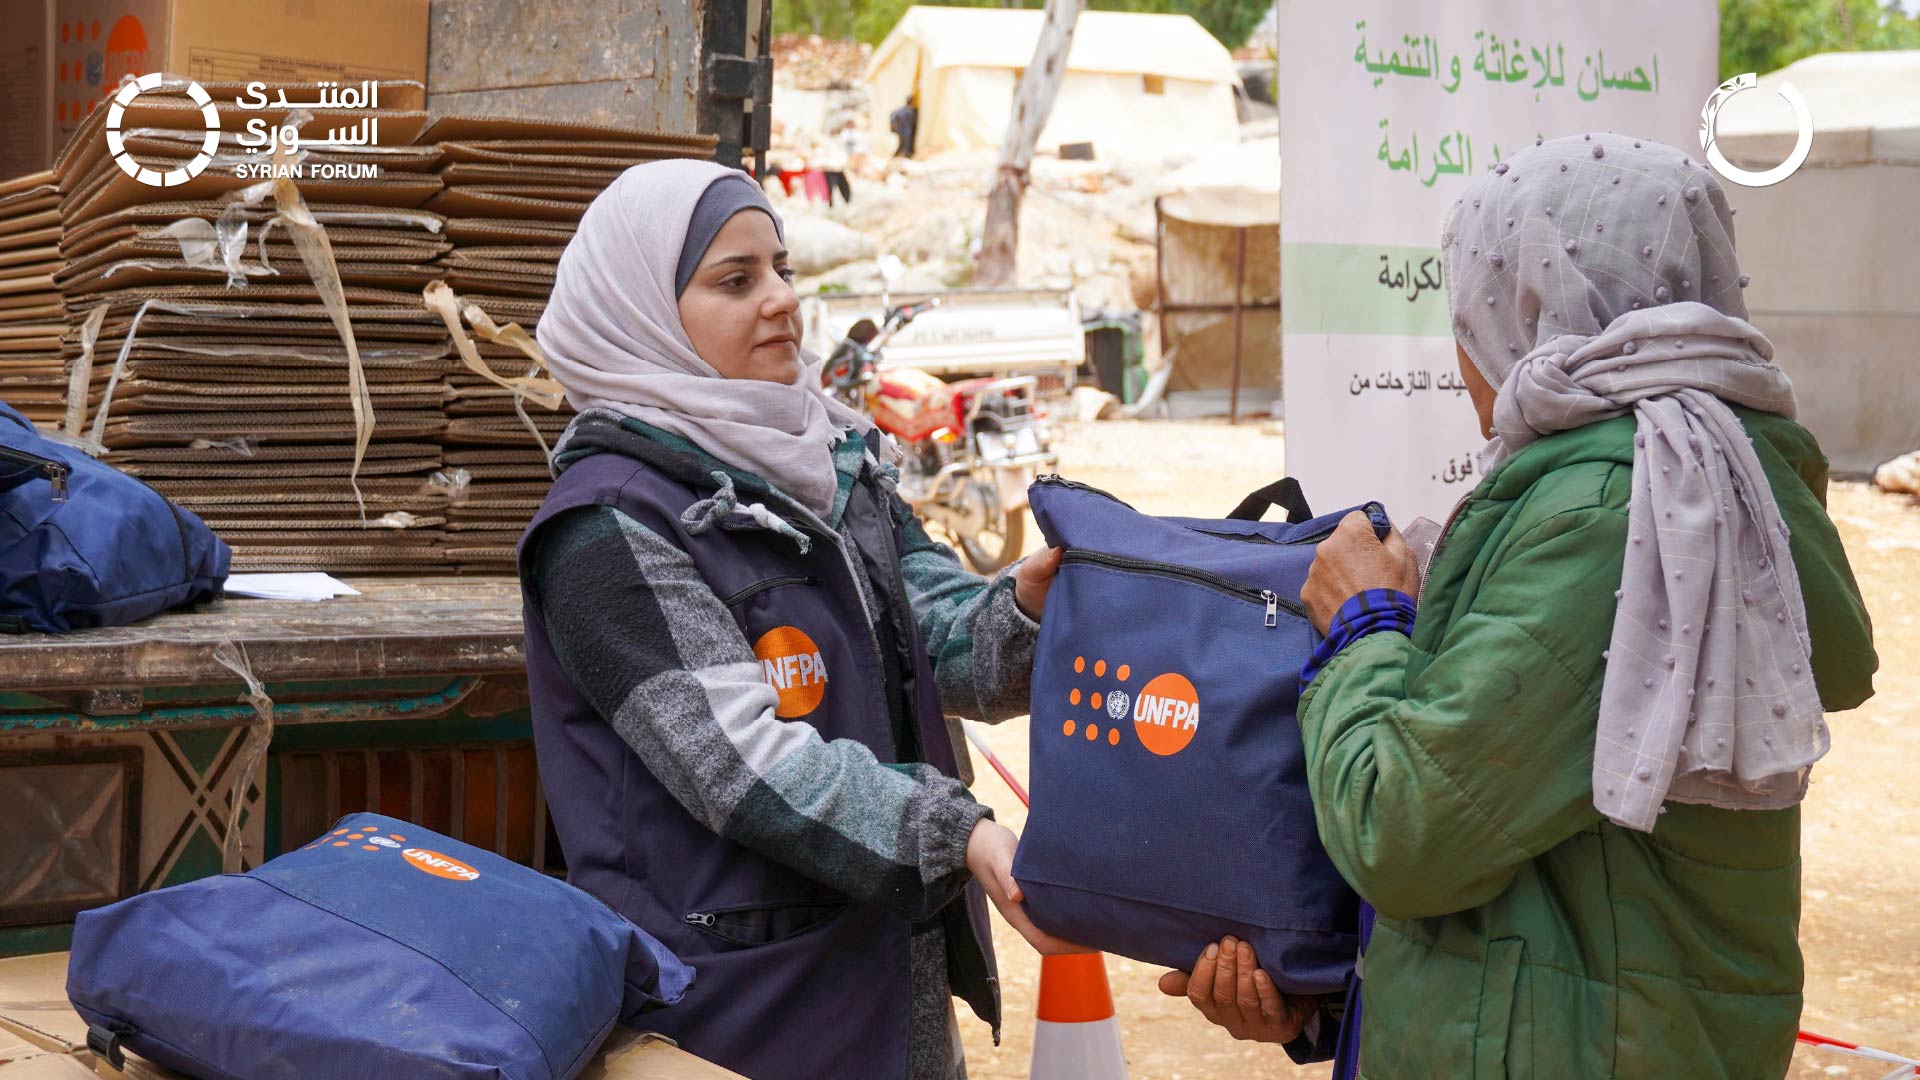 Distribution of Personal Hygiene Kits in Al-Ziyara Camp, Ma’arrat Misrin